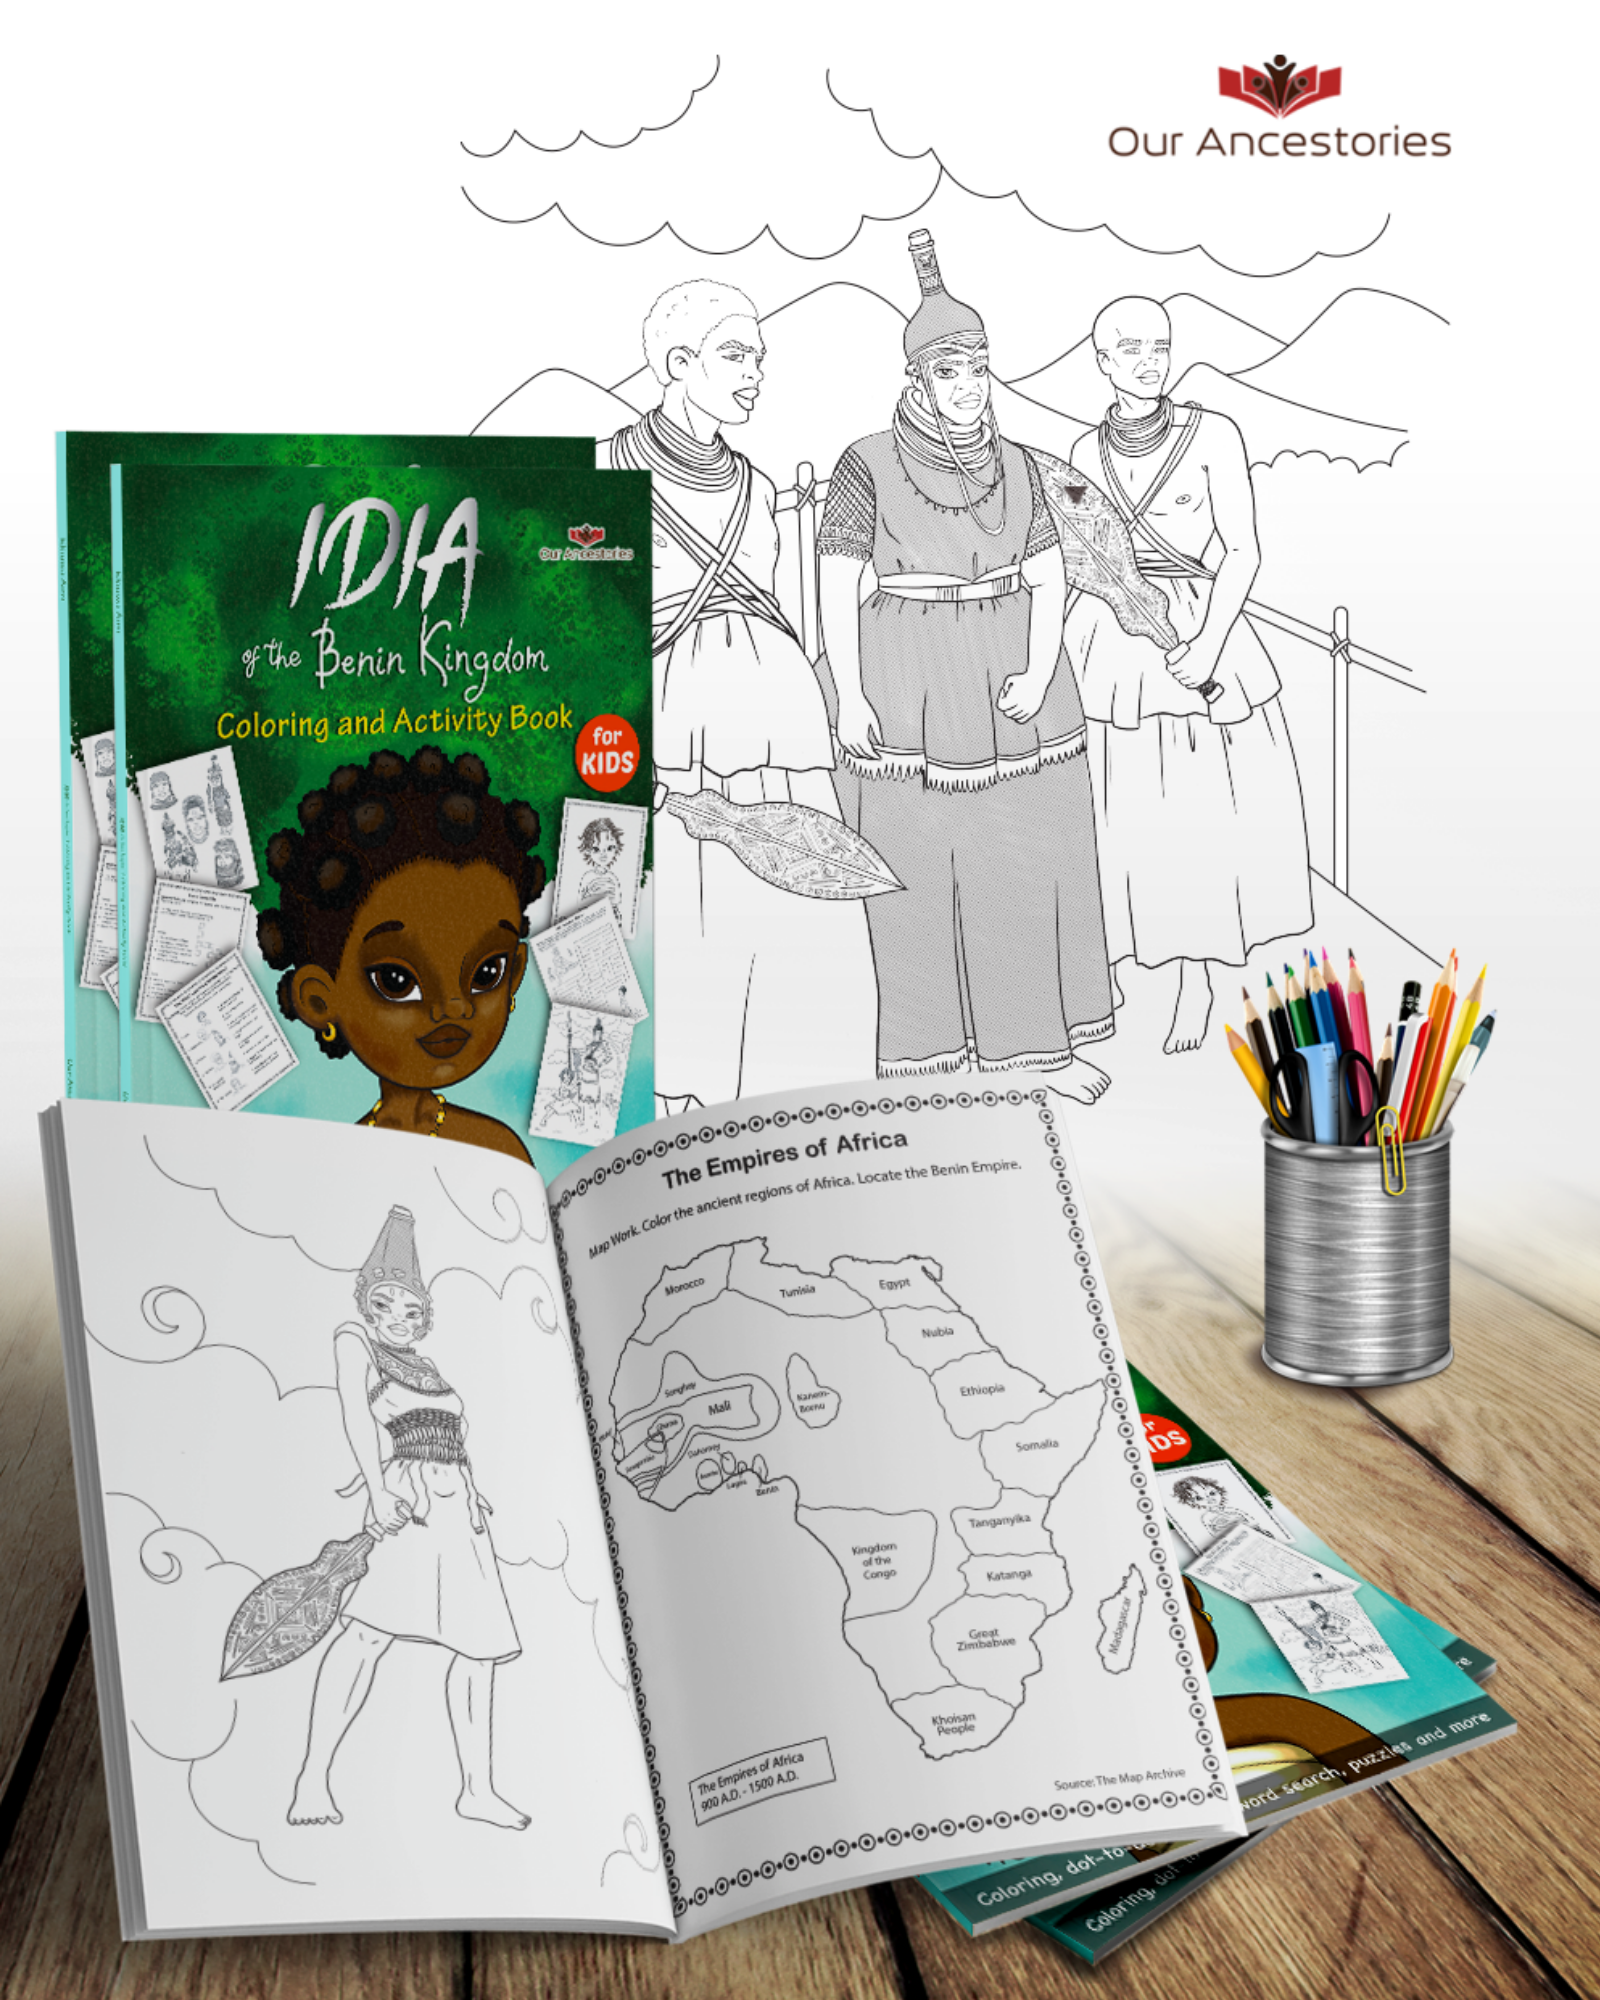 Idia of the Benin Kingdom: Workbook